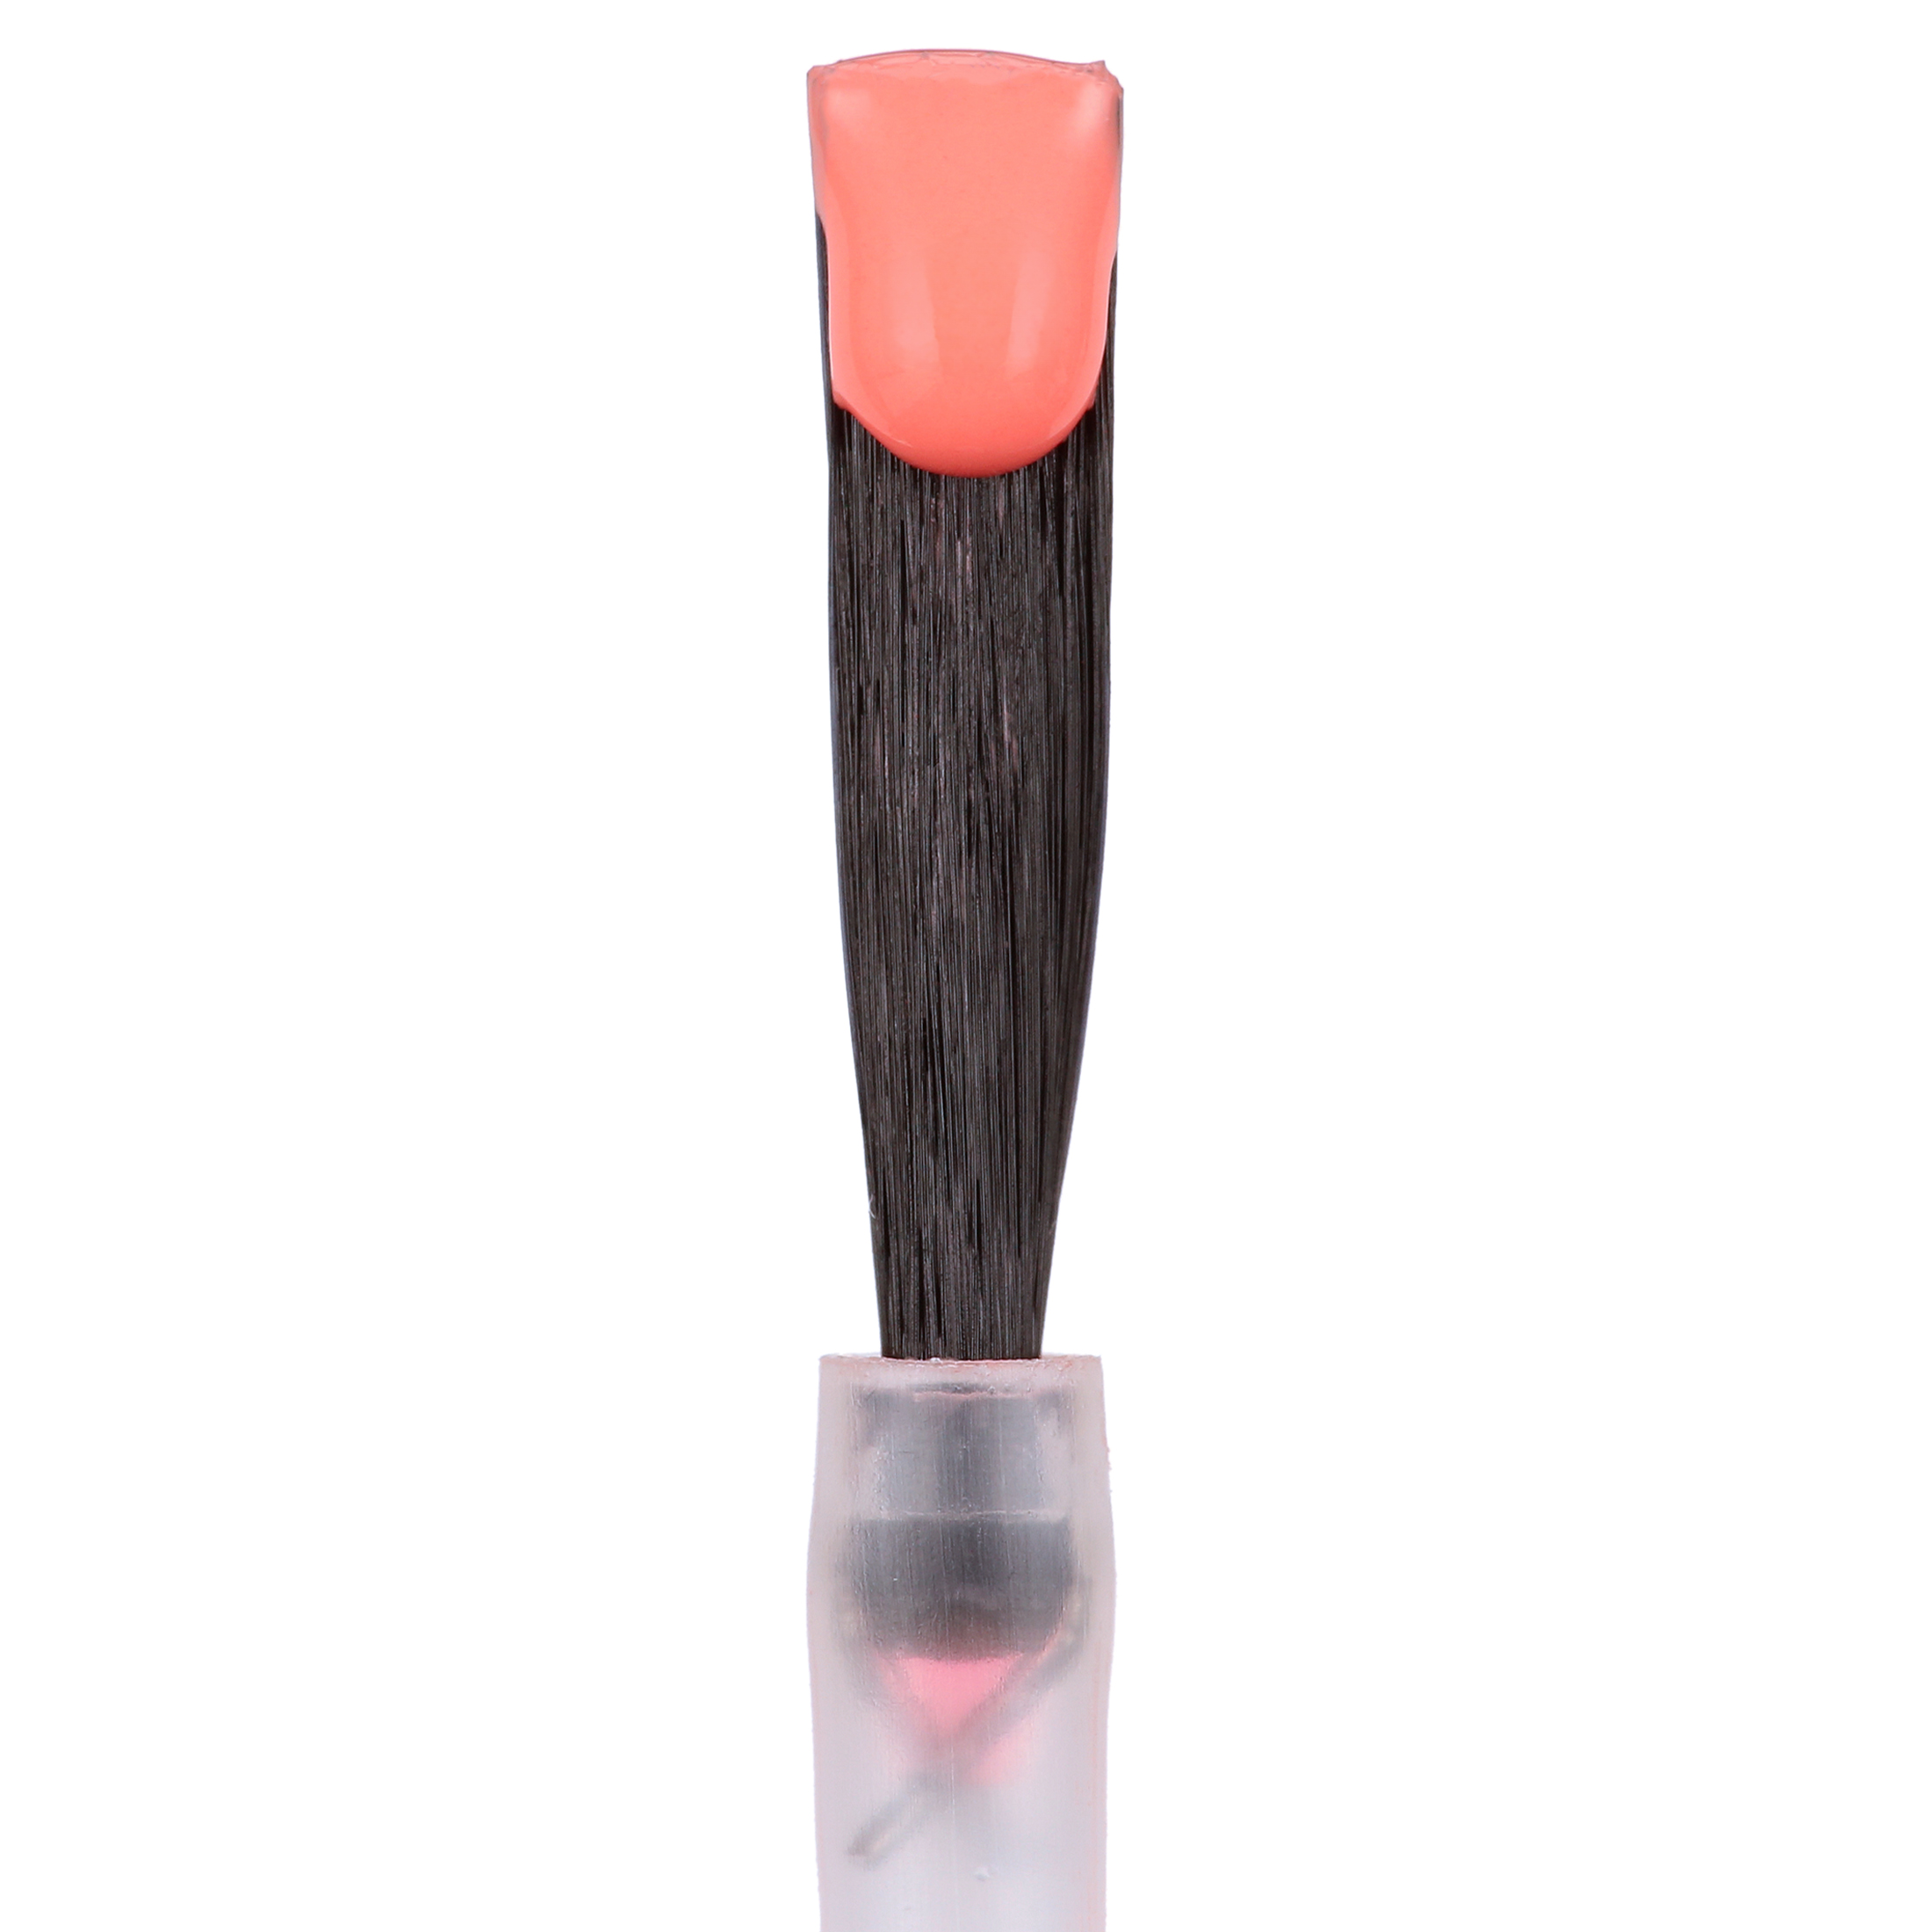 Salon Perfect Nail Polish, Flamingo Flair, 0.5 fl oz - image 6 of 7